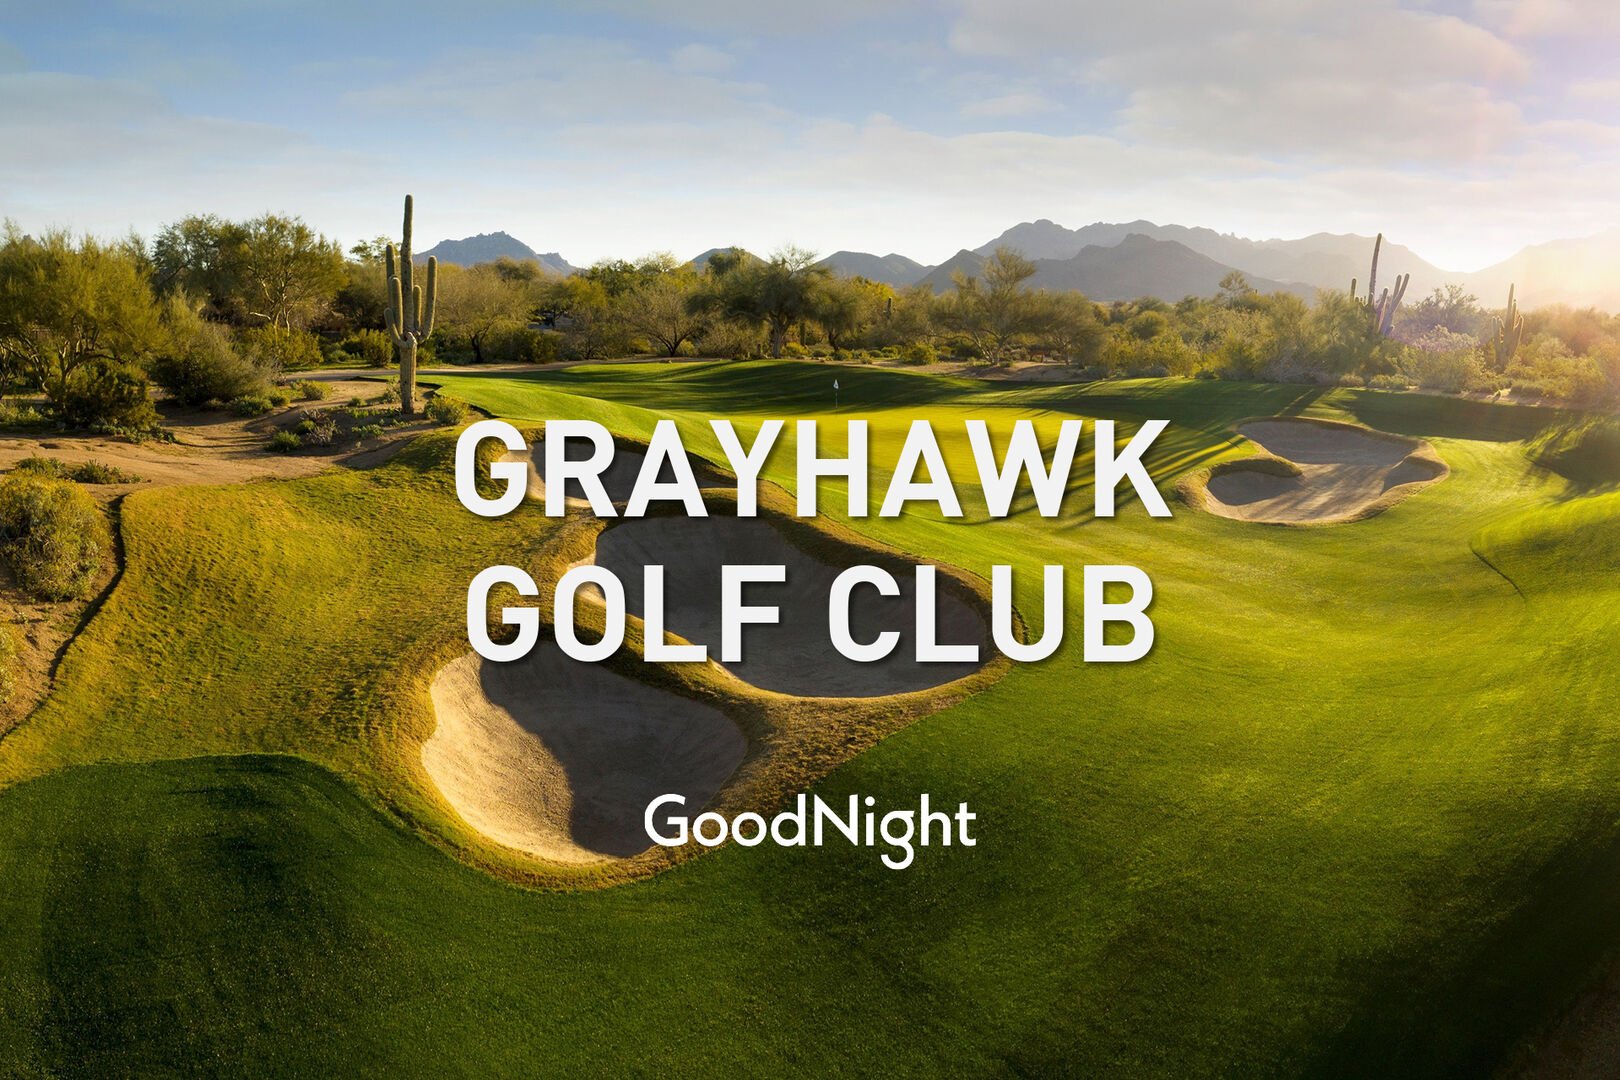 15 minutes to Grayhawk Golf Club